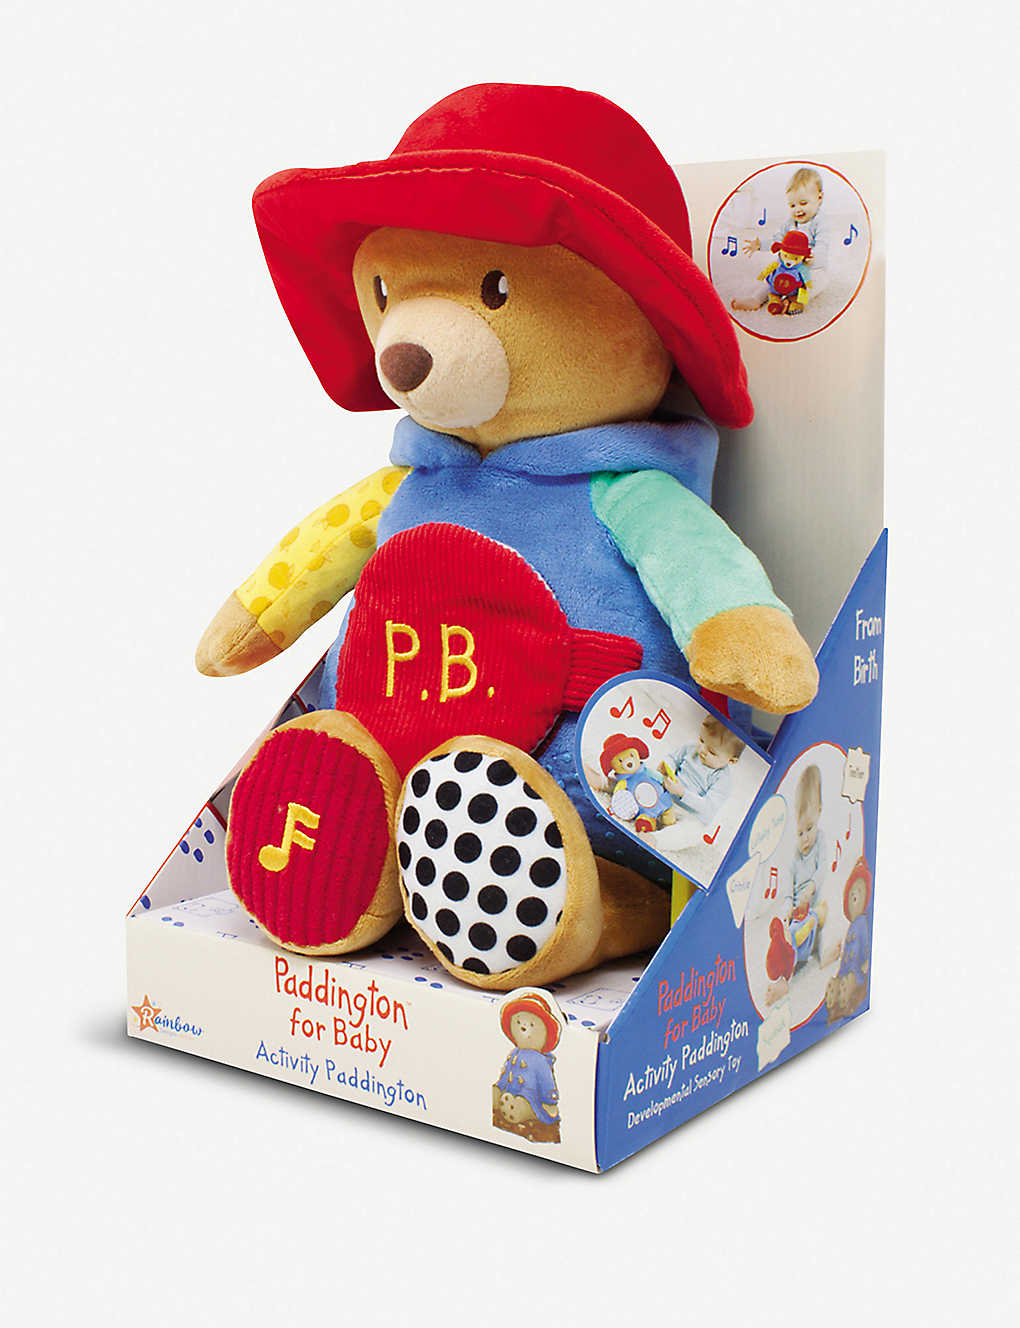 Paddington bear Activity Cube 15cm Cuddly Soft Toy by Rainbow Designs 